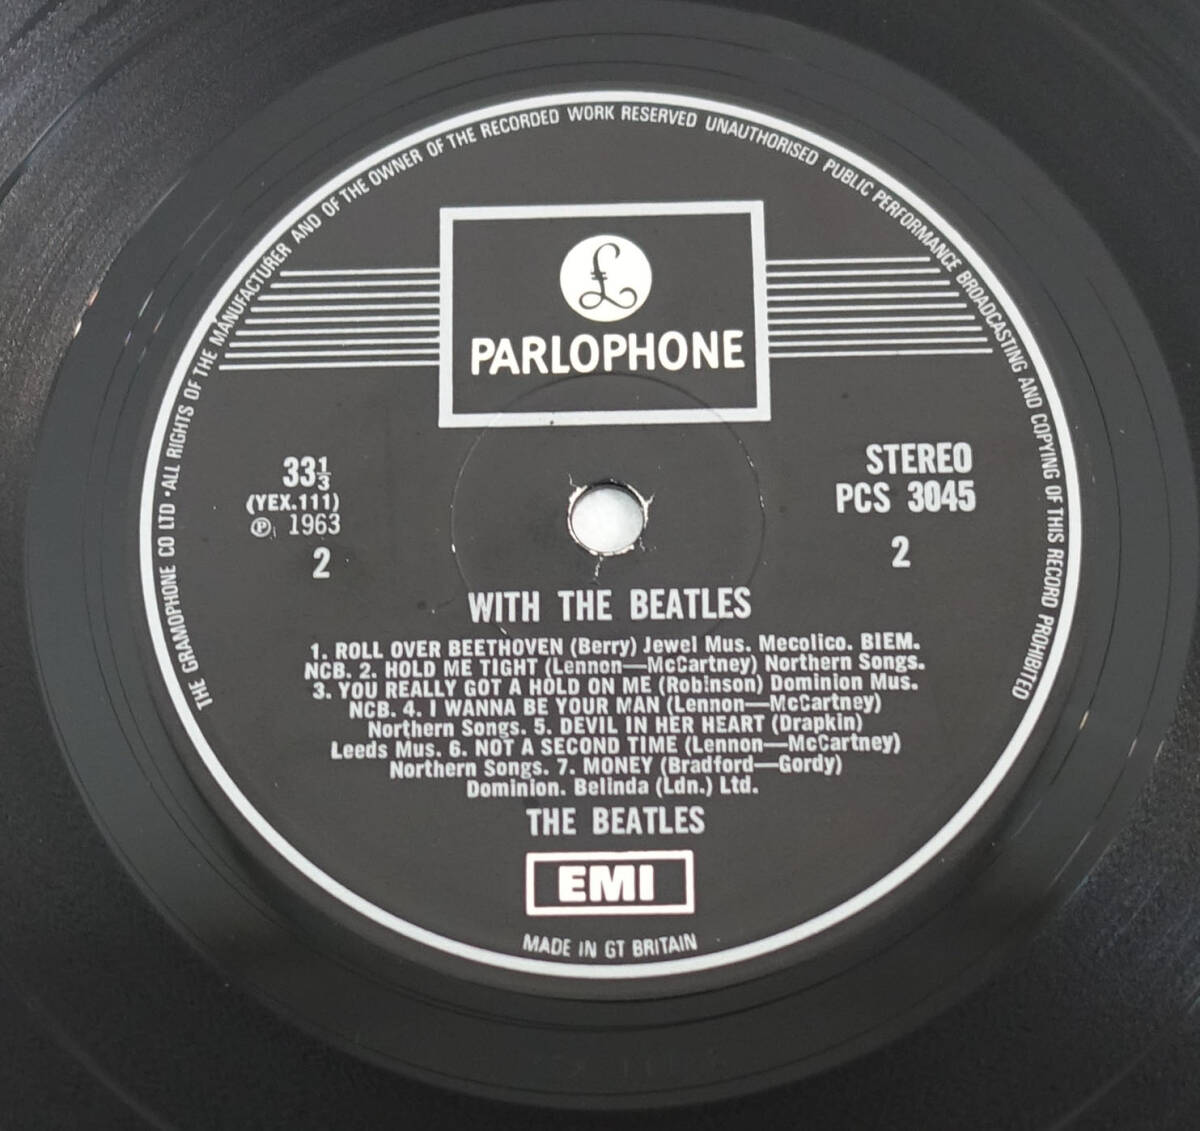 希少! UK Original Parlophone PCS 3045 Rare EMI ONE BOX With The Beatles MAT: 2/2_UK Parlophone PCS、Stereo Press